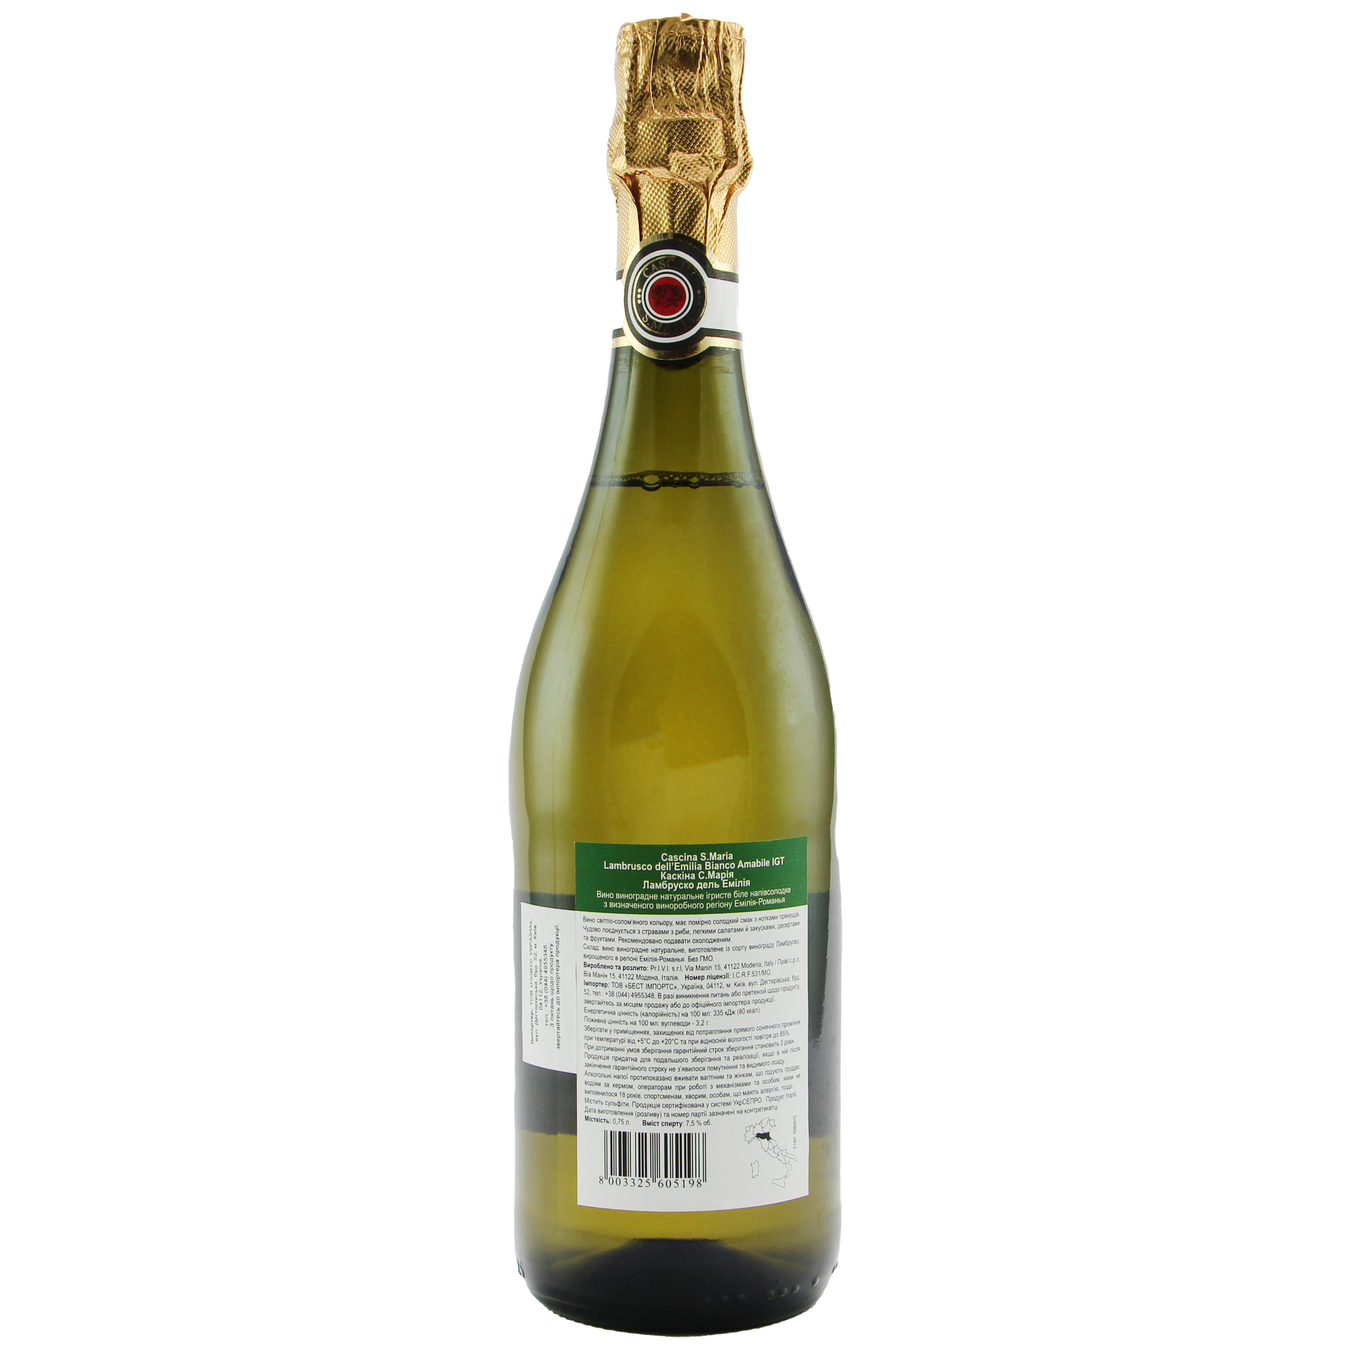 Вино Cascina S.Maria Bianco Amabile Lambrusco dell'Emilia игристое белое полусладкое 7.5% 0,75л 2